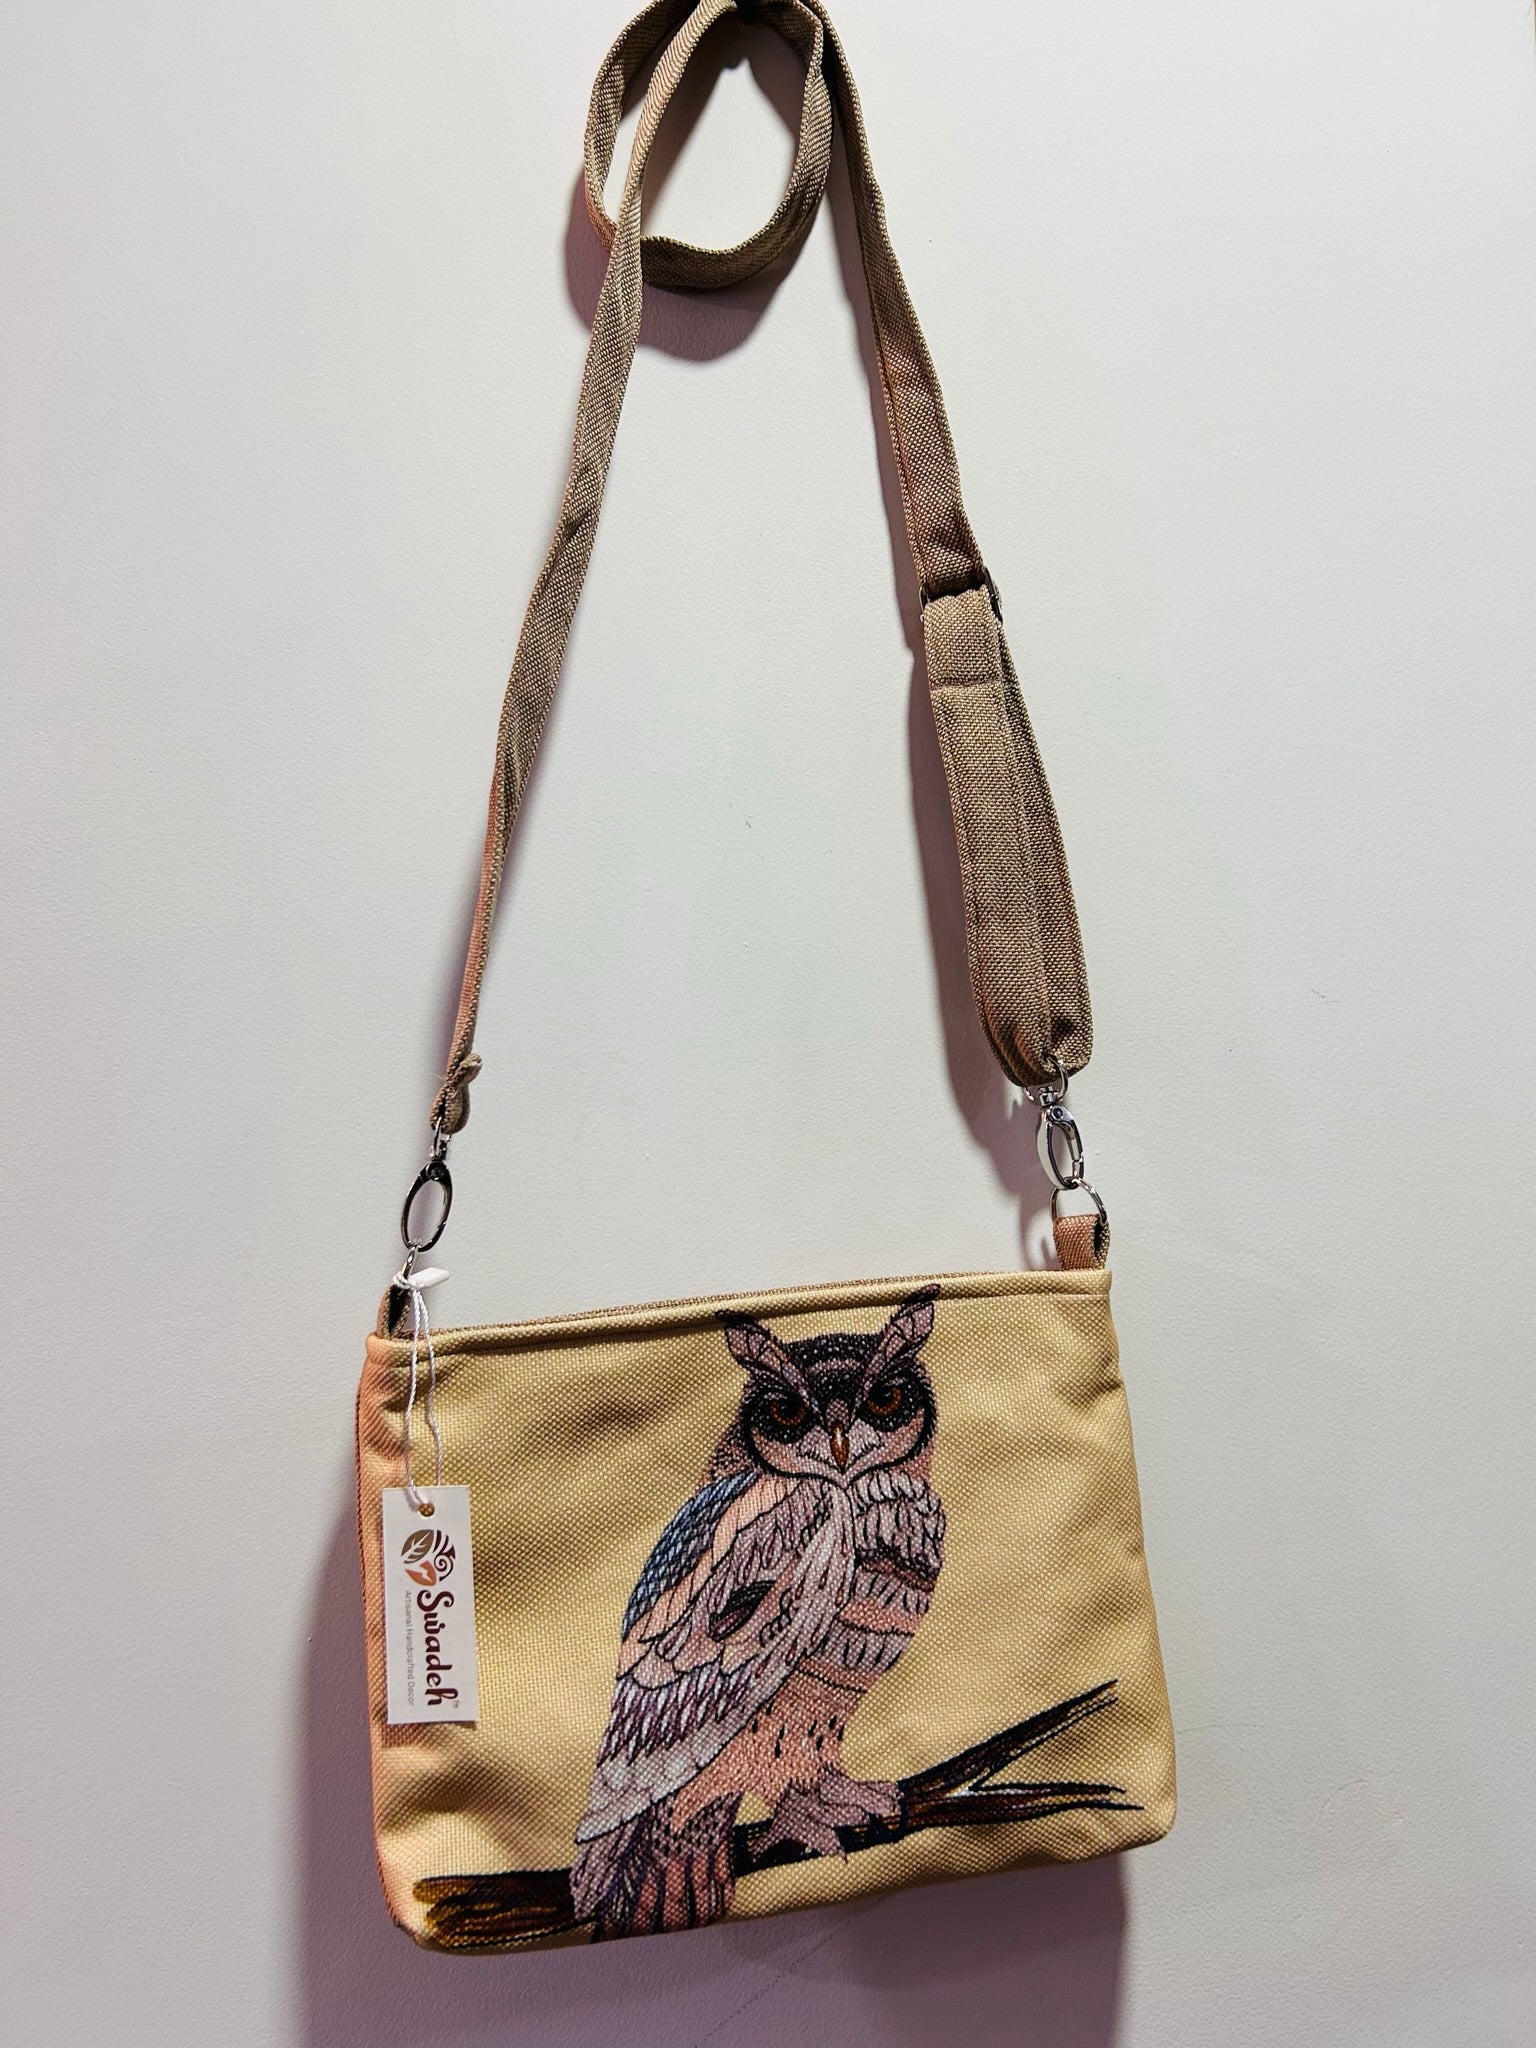 Owls Perch Sling Bag